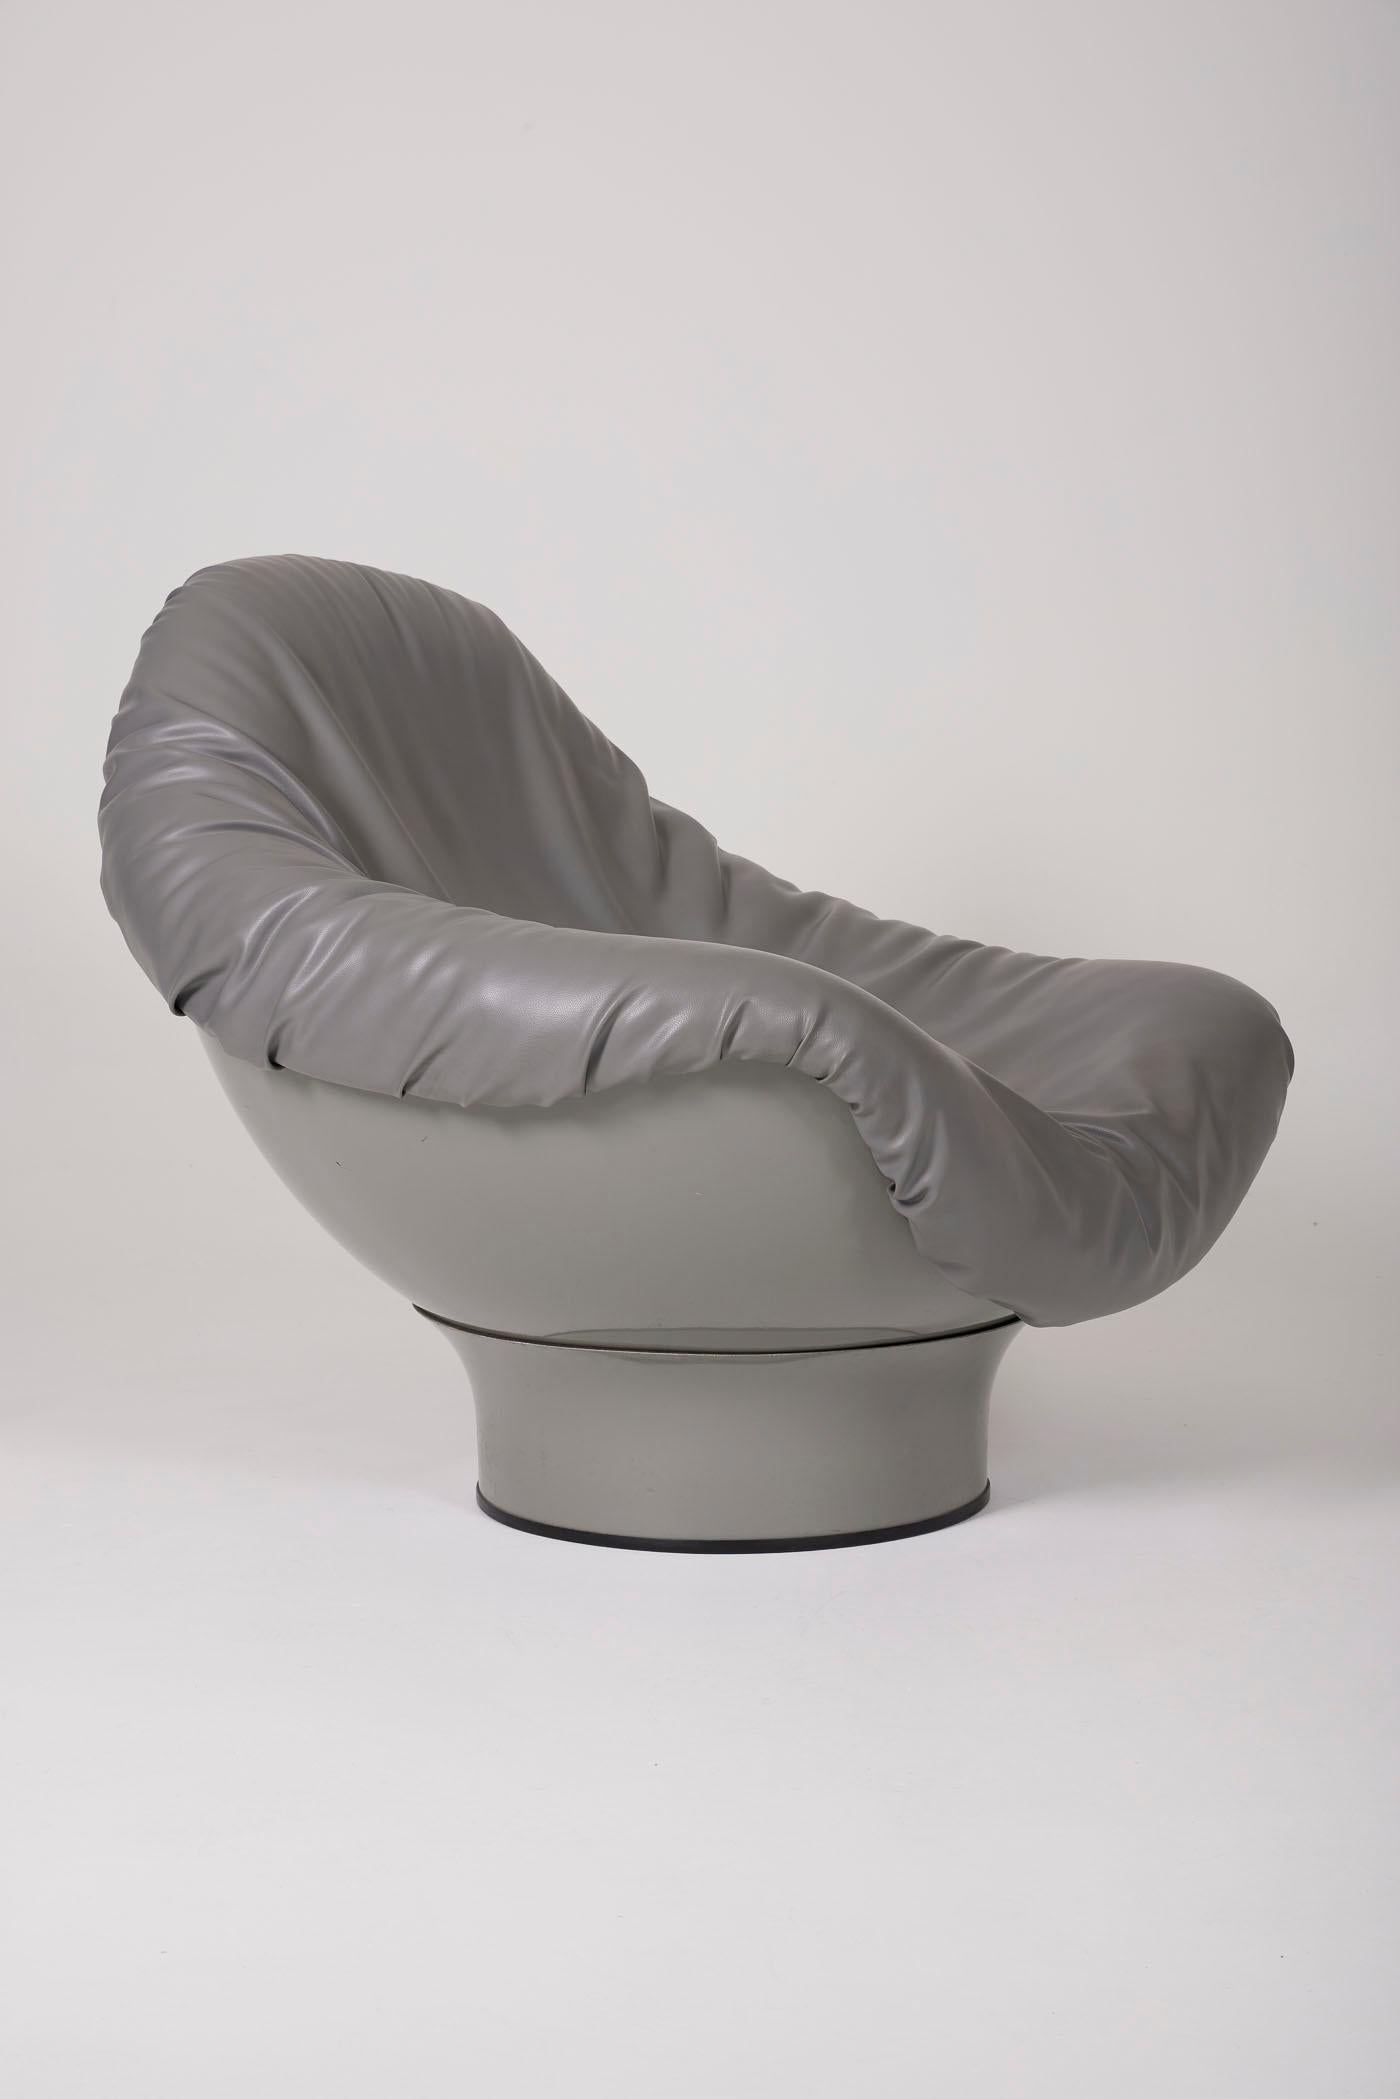 Leather Mario Brunu armchair For Sale